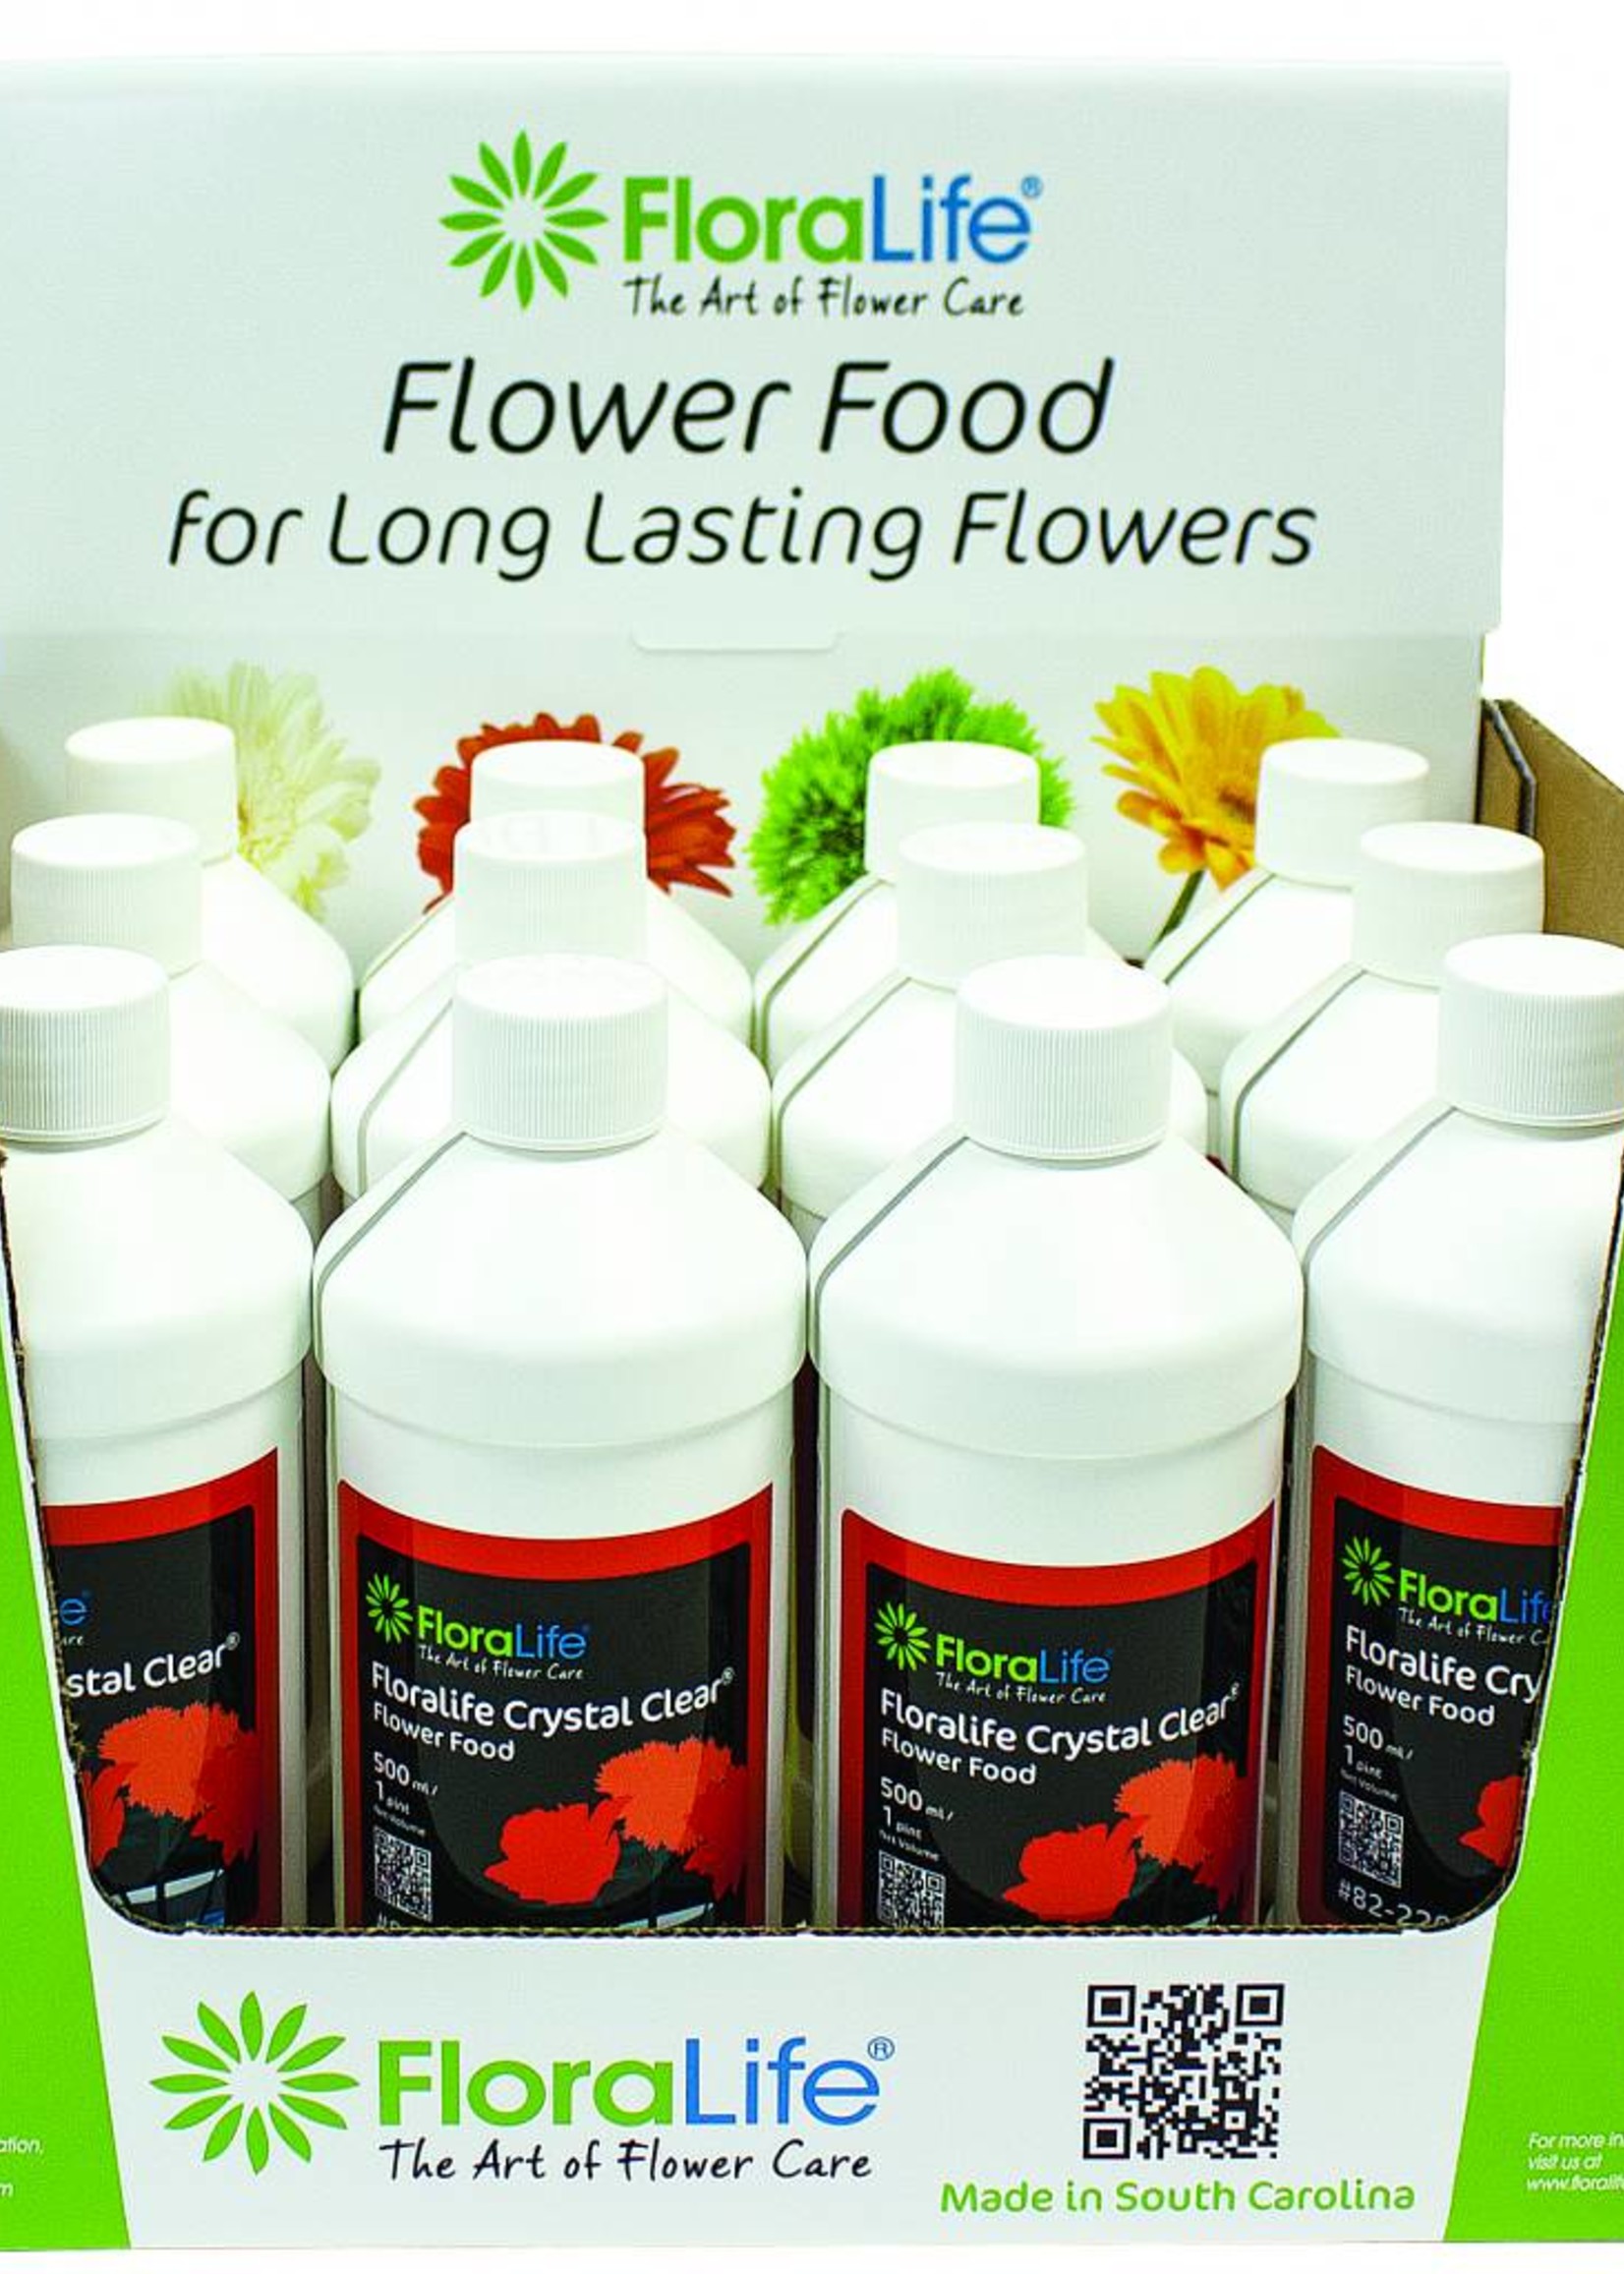 Floralife Crystal Clear® flower food